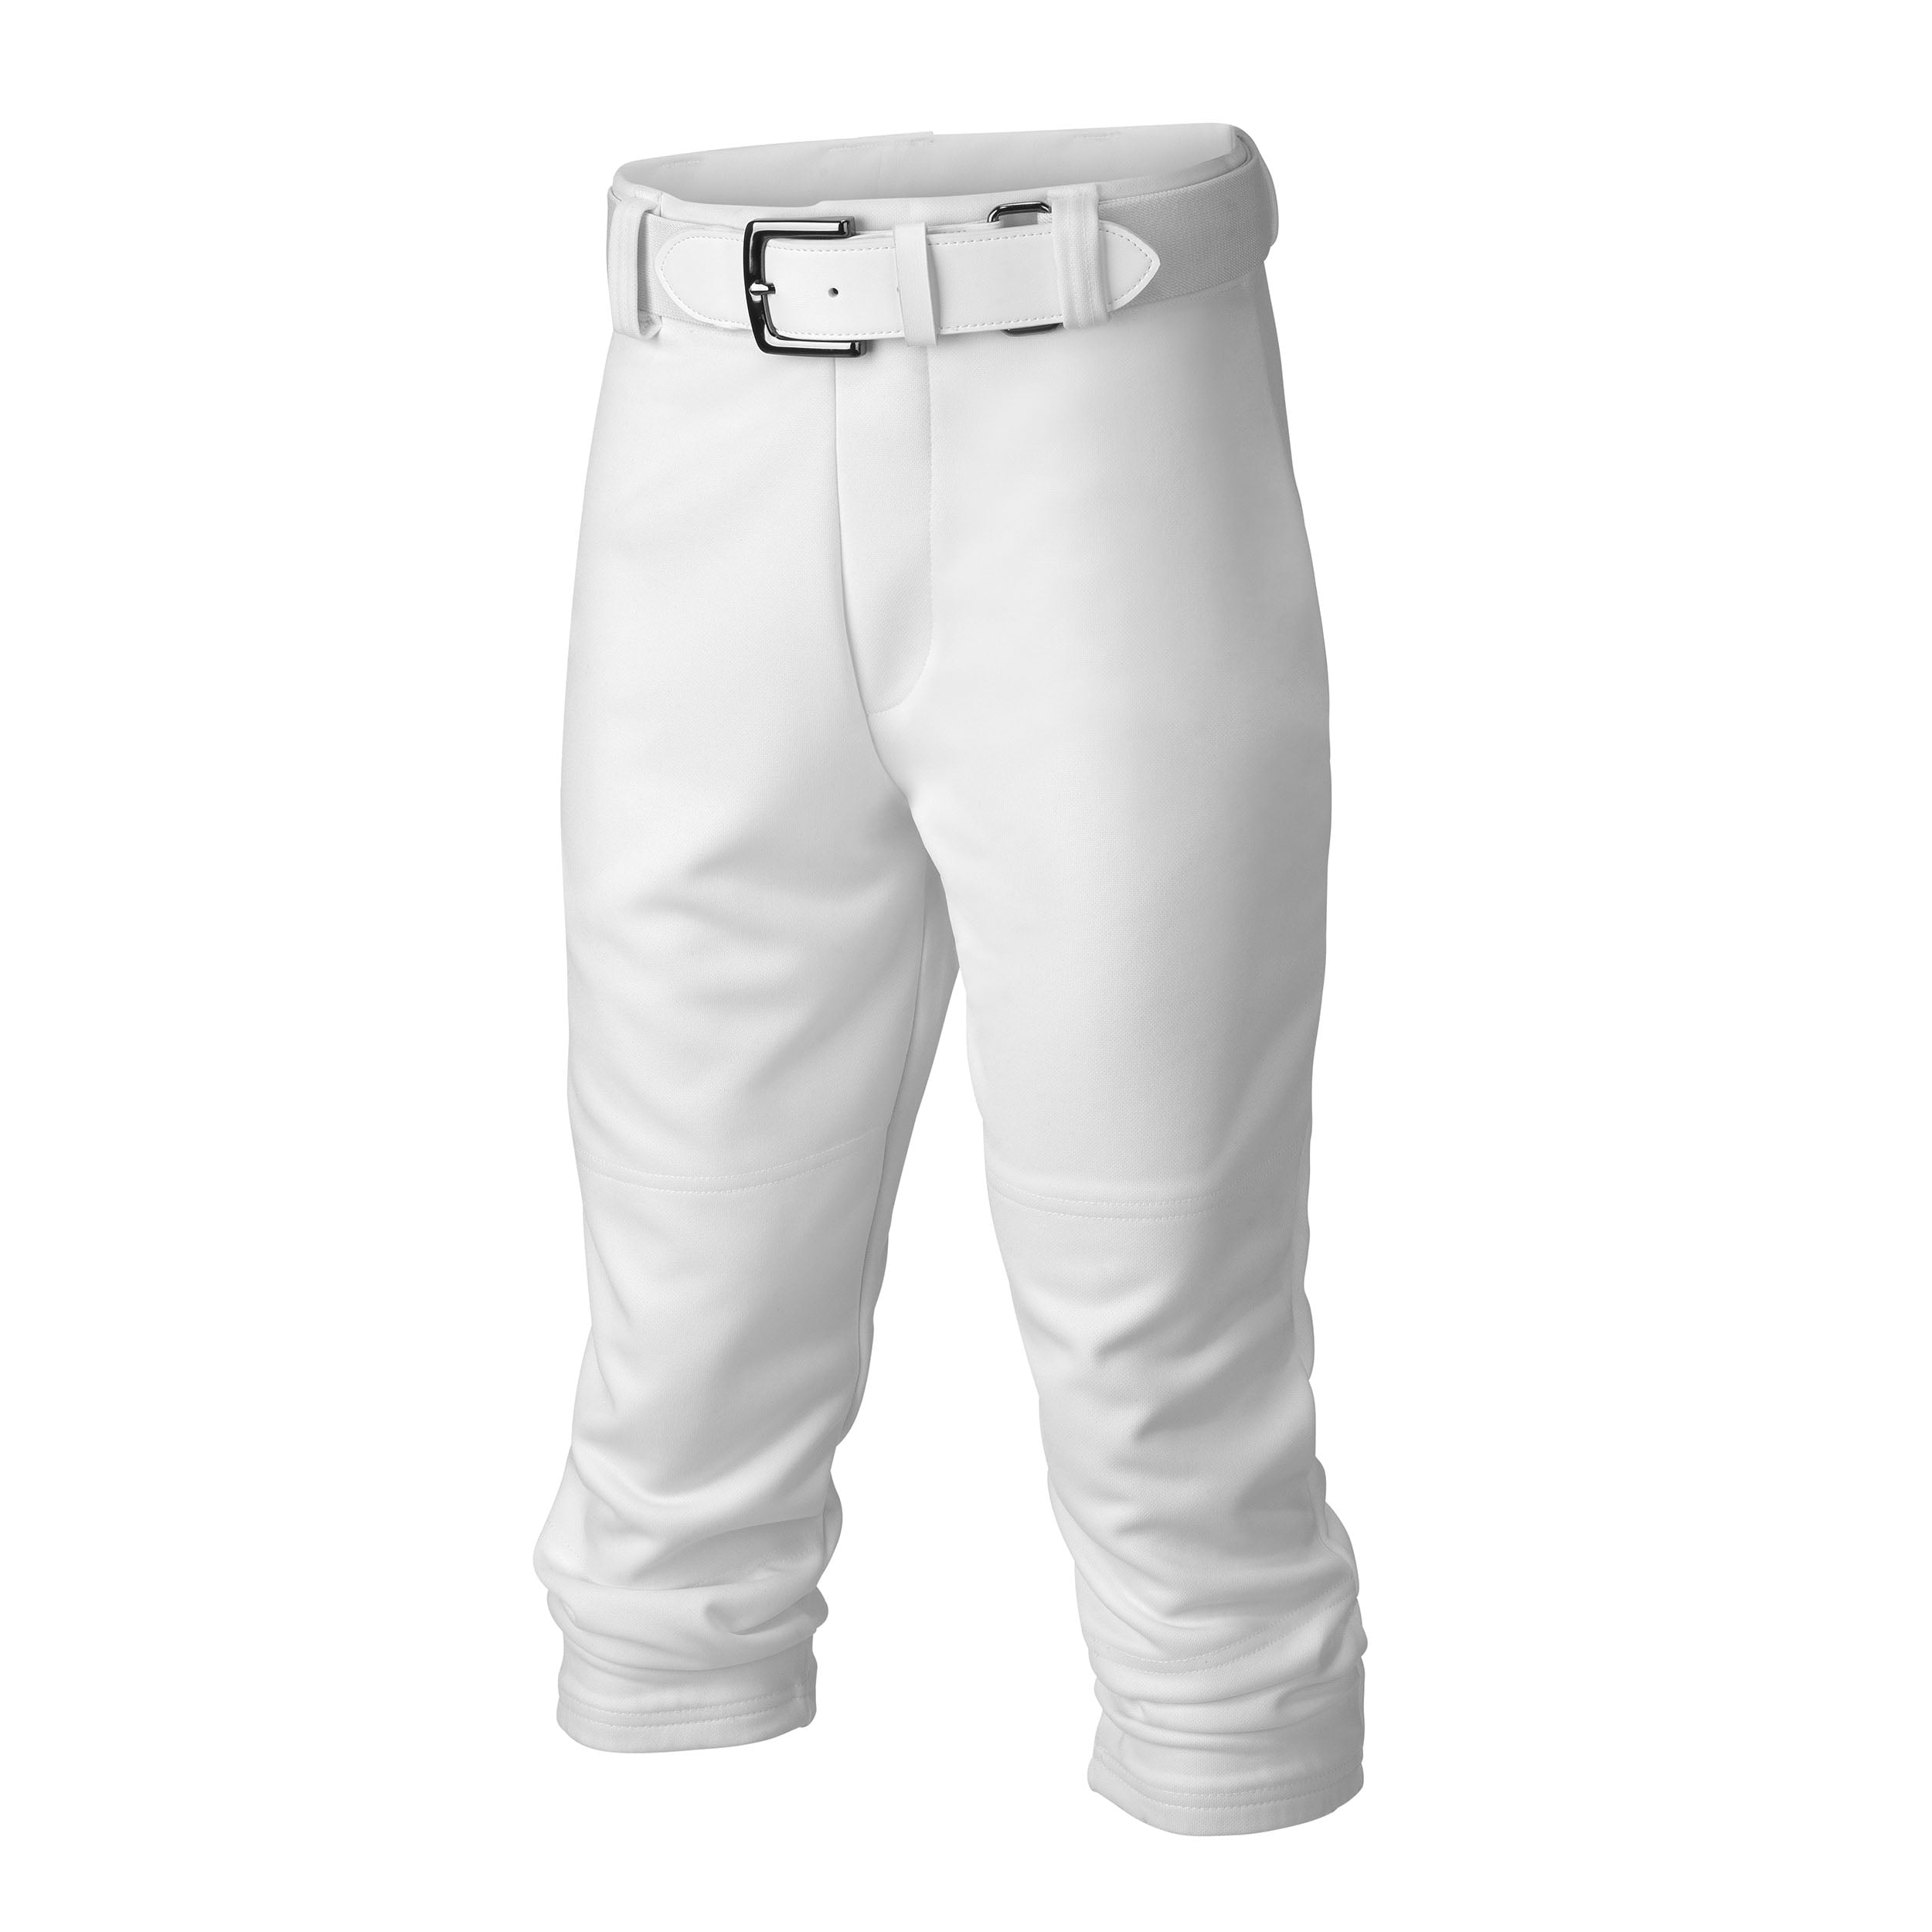 EASTON Baseball PANTS Grey Pant Youth Deluxe Pant A164105GYYL SIZE YL NEW 